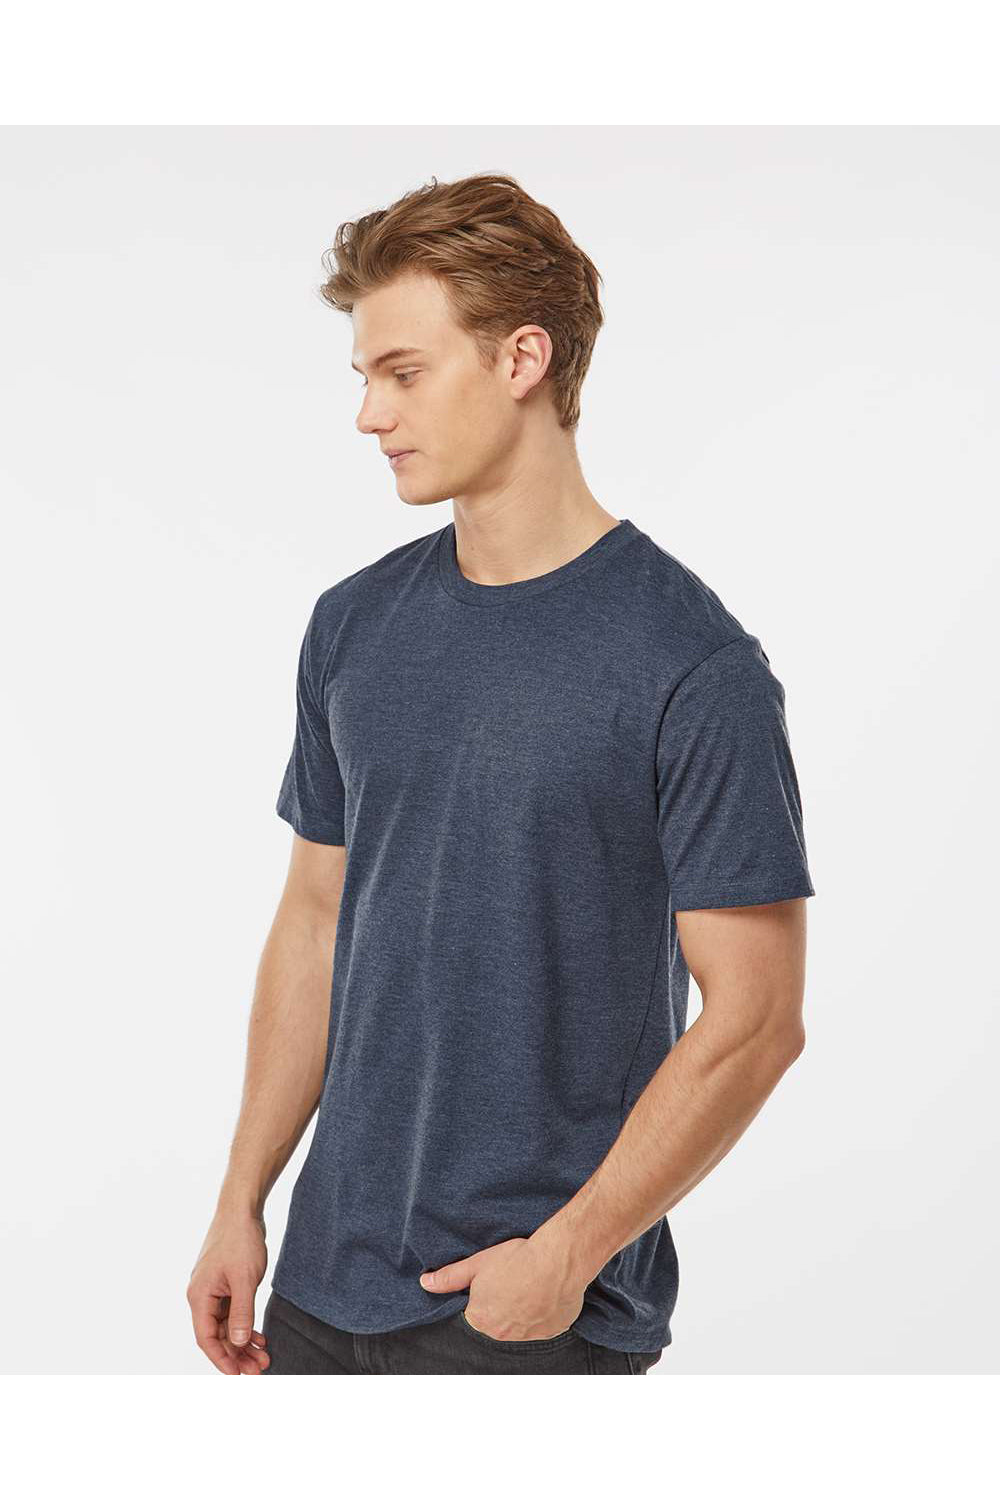 Tultex 541 Mens Premium Short Sleeve Crewneck T-Shirt Heather Navy Blue Model Side